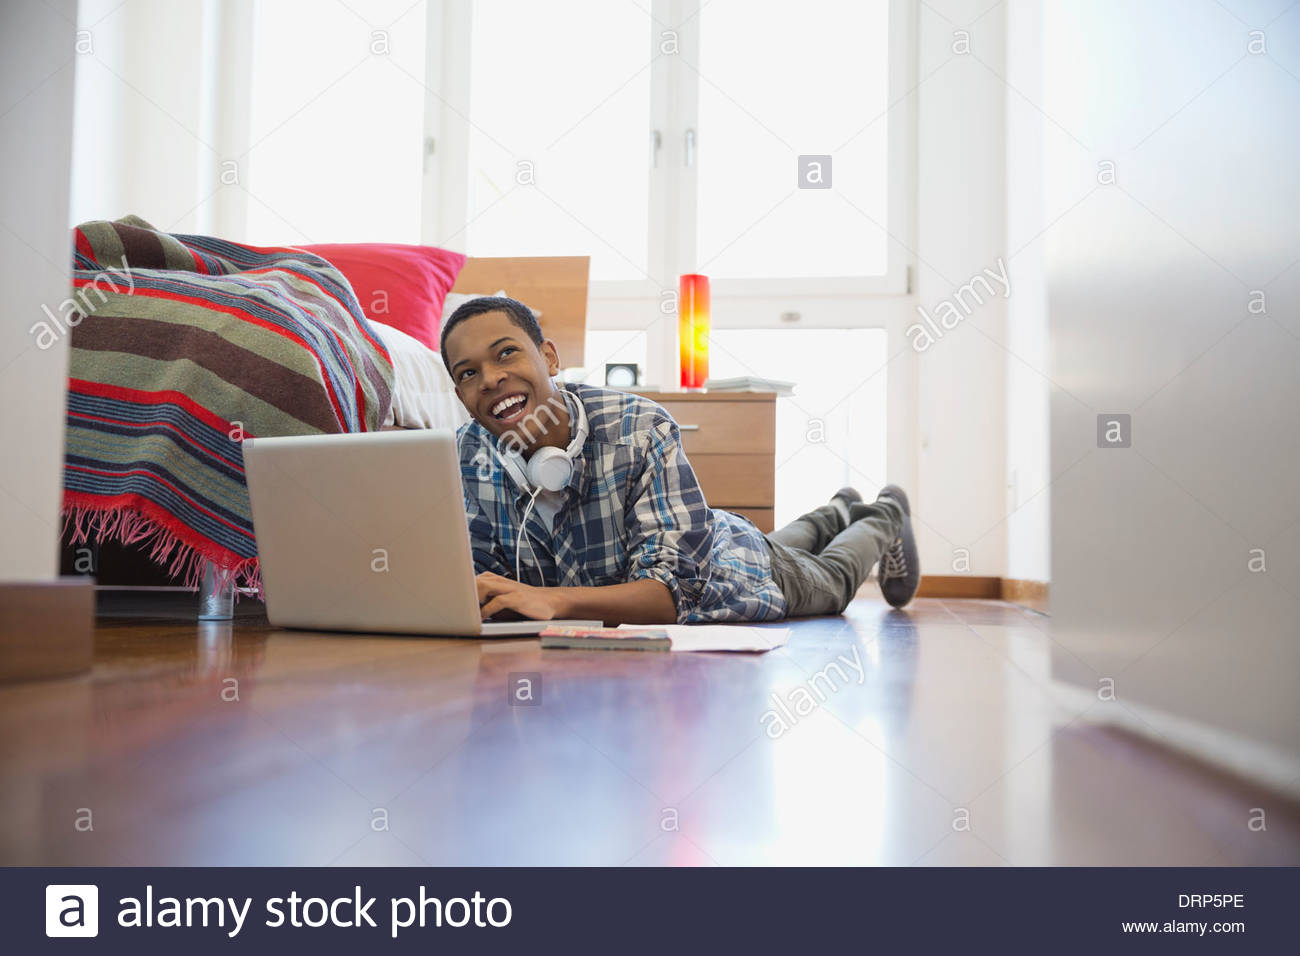 Teenager using laptop in bedroom Stock Photo